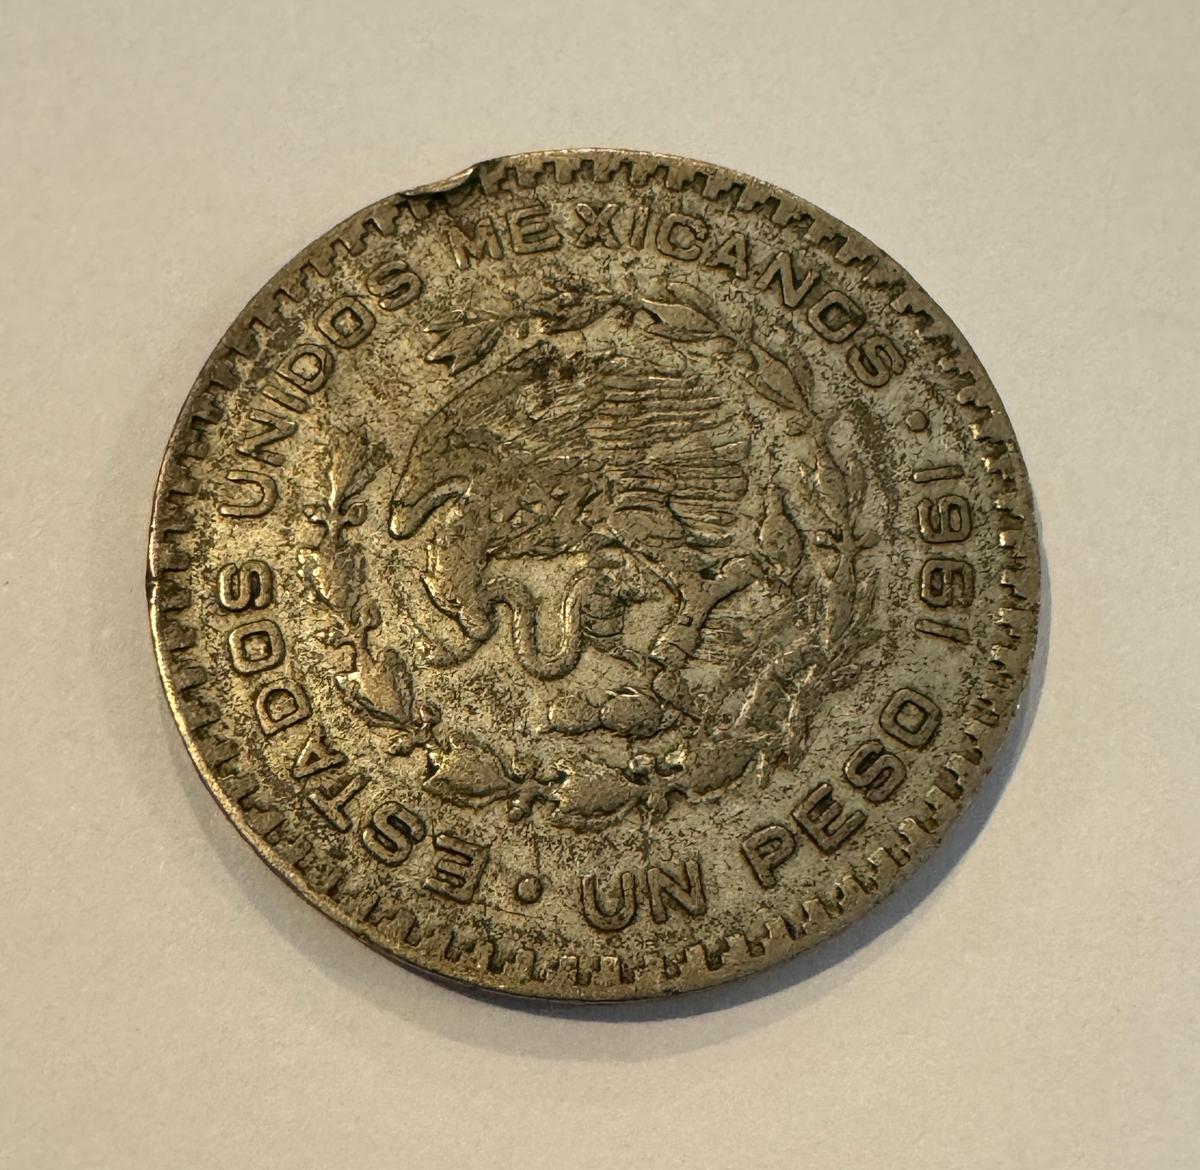 1961 Mexican (Mexico) One Peso Silver Coin - Old World Silver